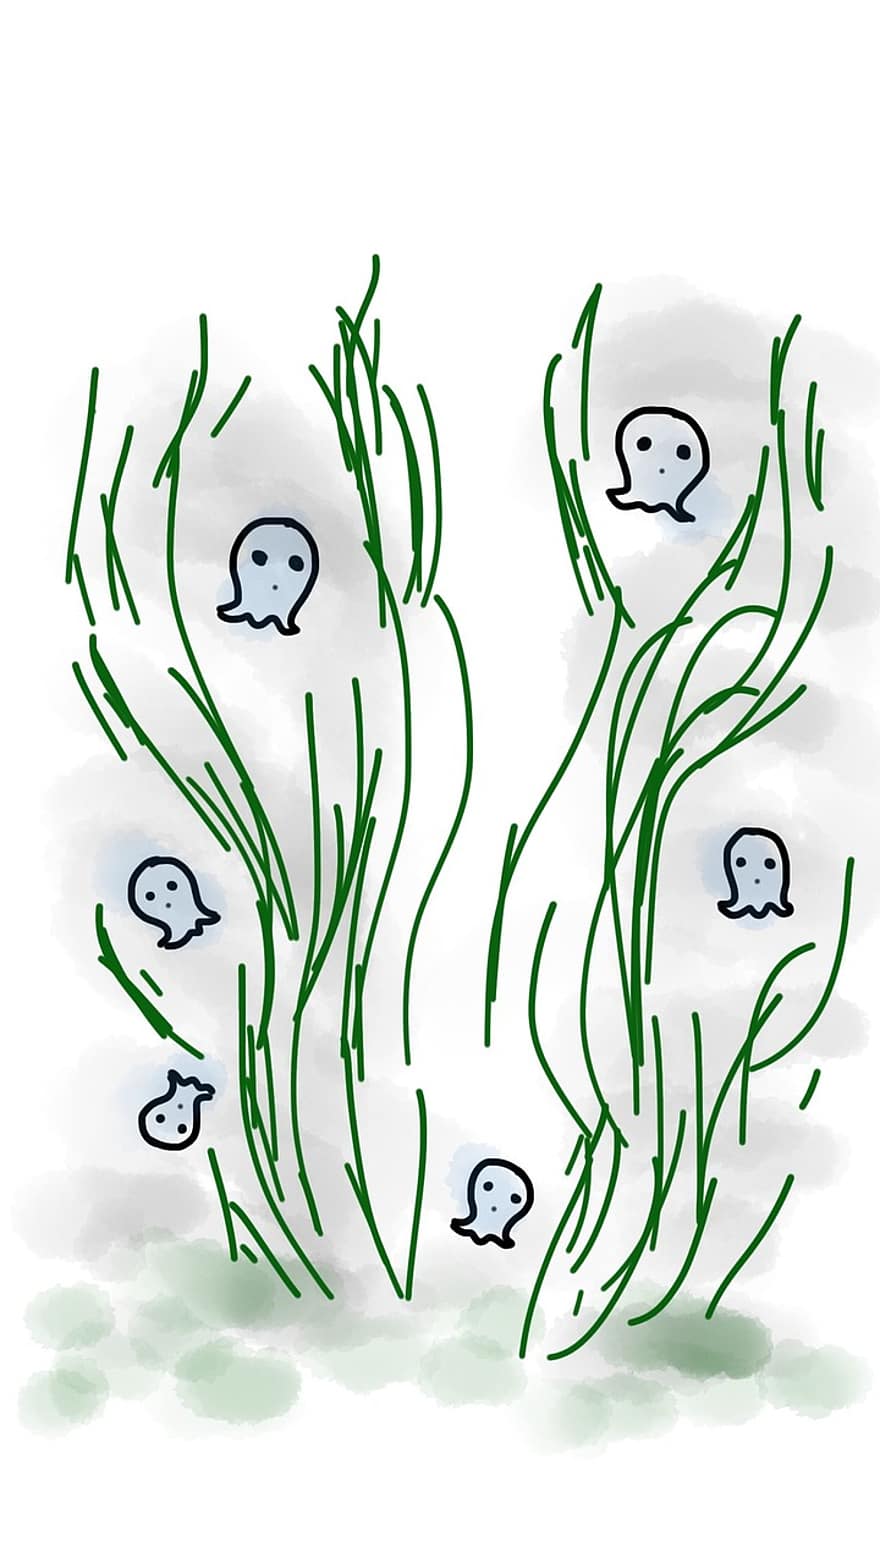 Ghost, Grass, Halloween, Mystery, Floating, Darkness, Fear, Green, Little Ghost, Scary, Spooky